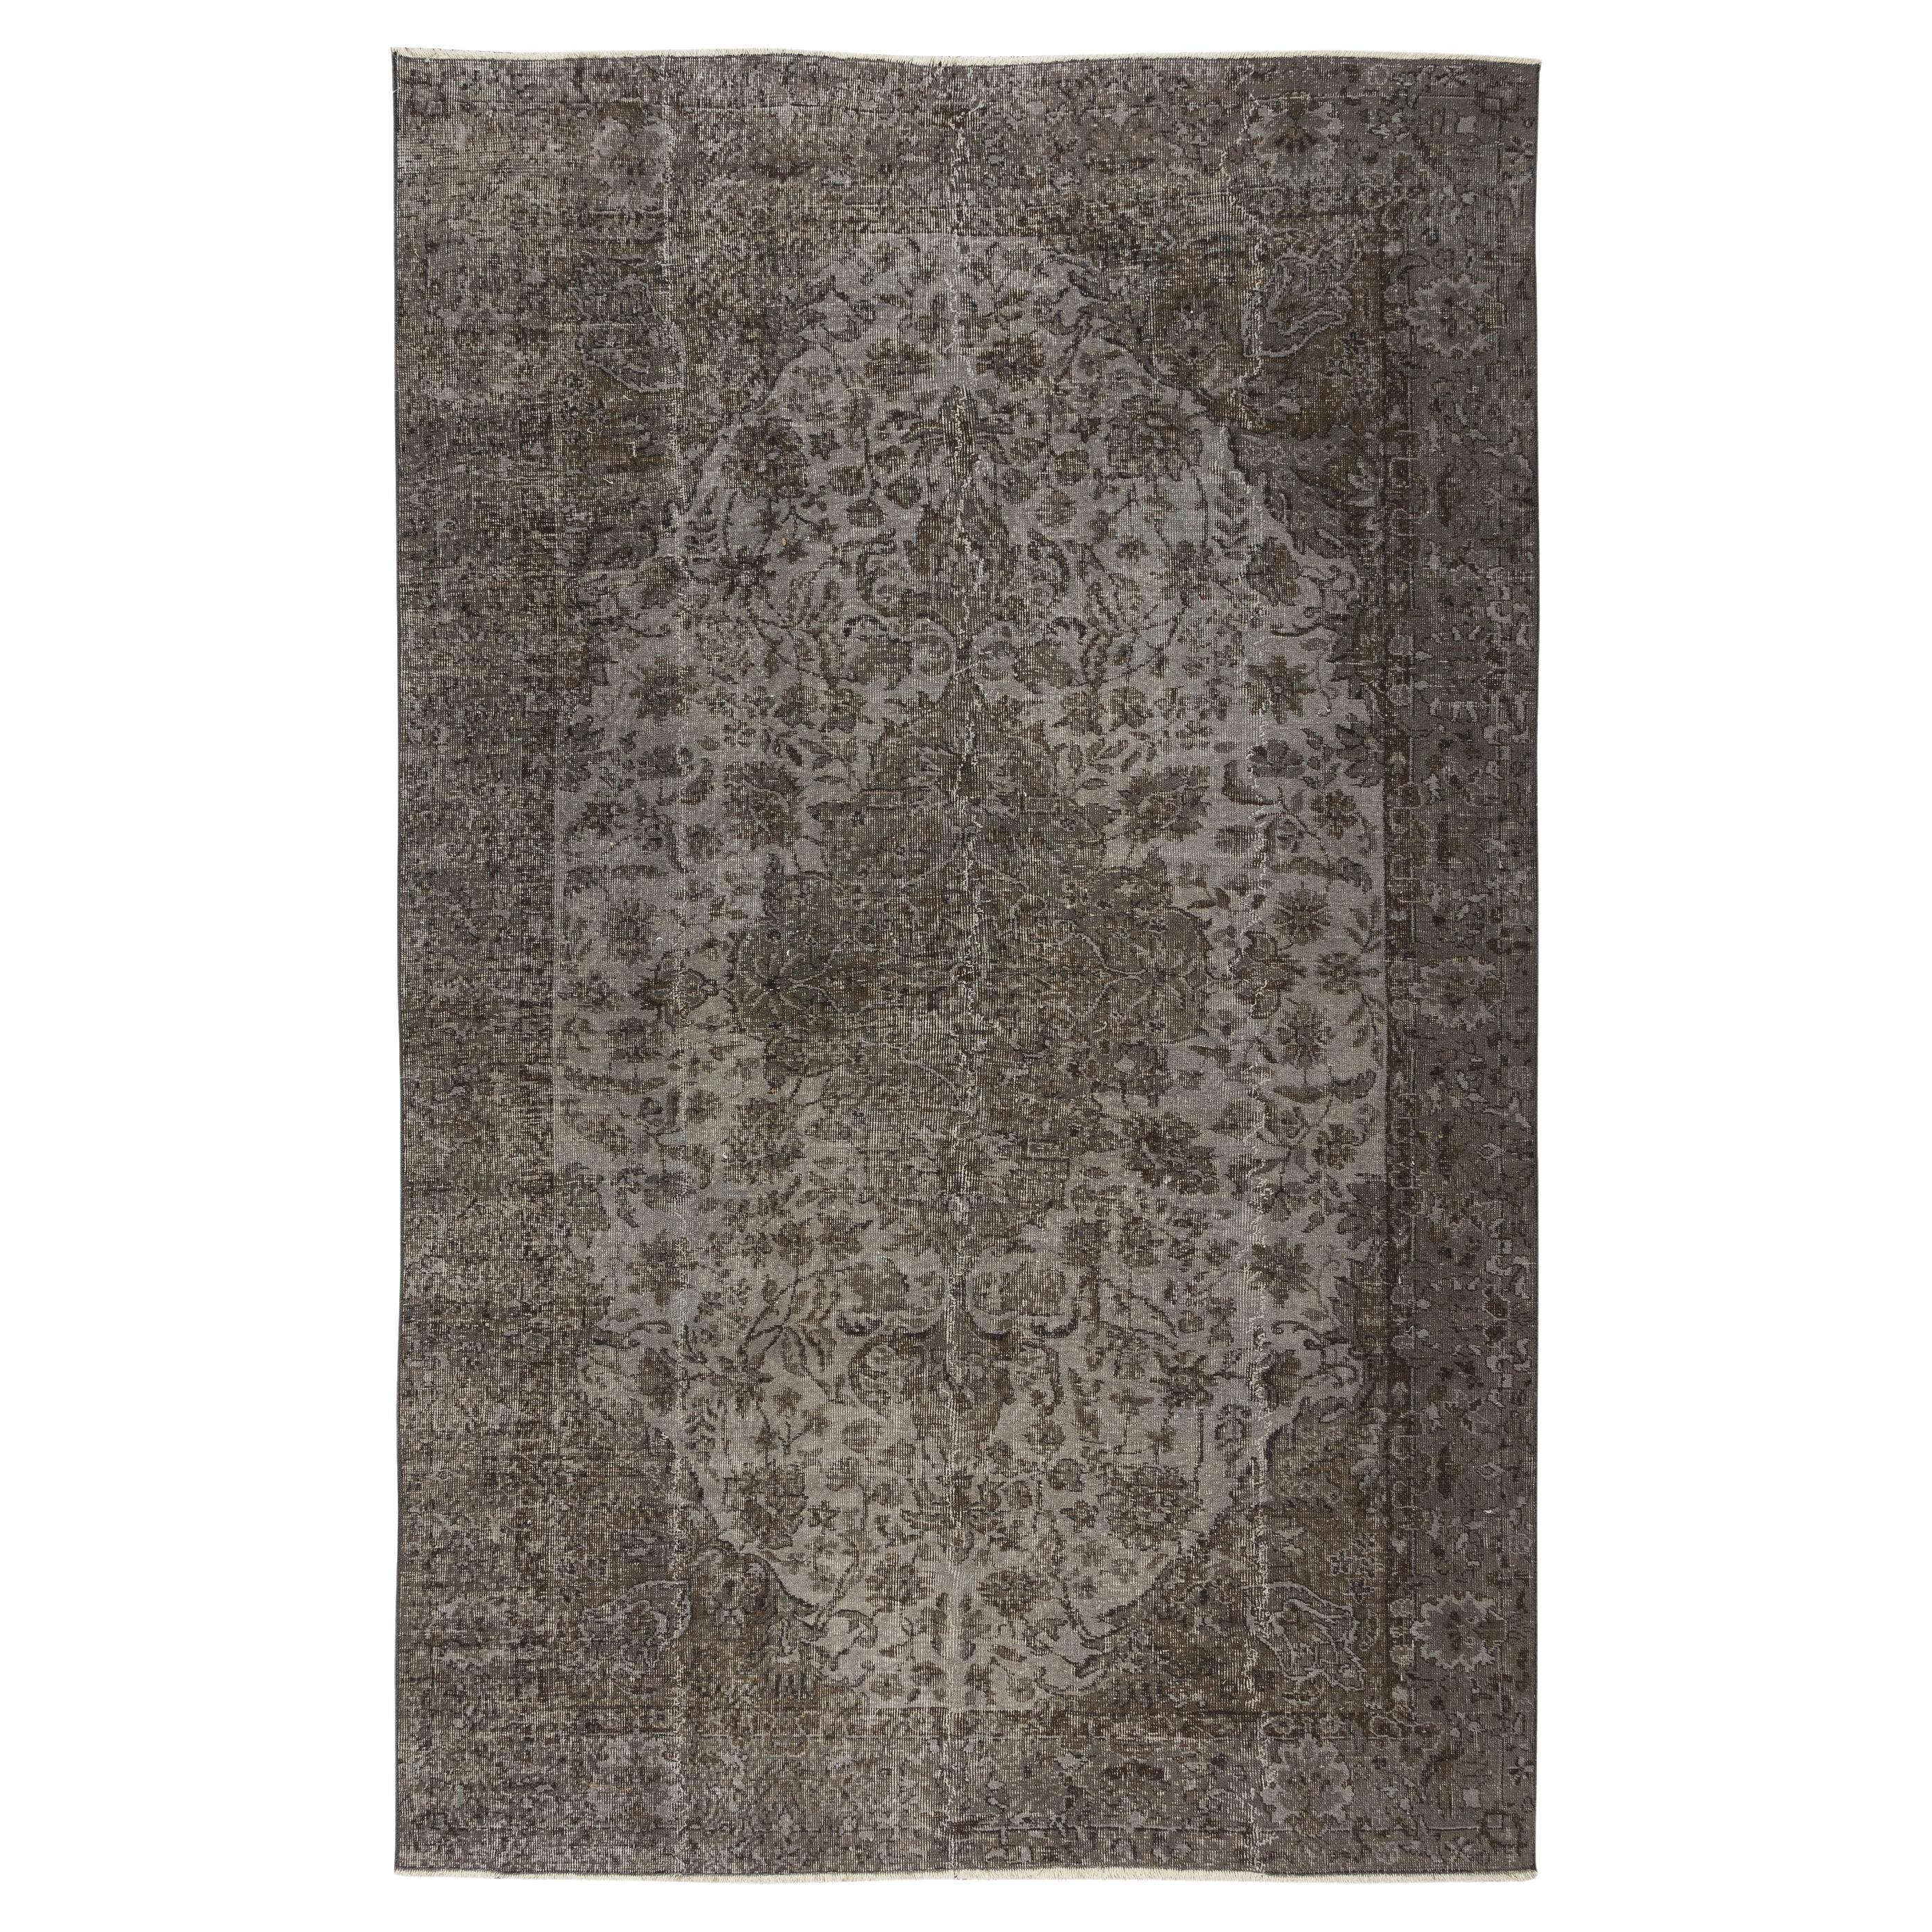 Handmade Vintage Anatolian Wool Rug in Gray, Dining Room Carpet